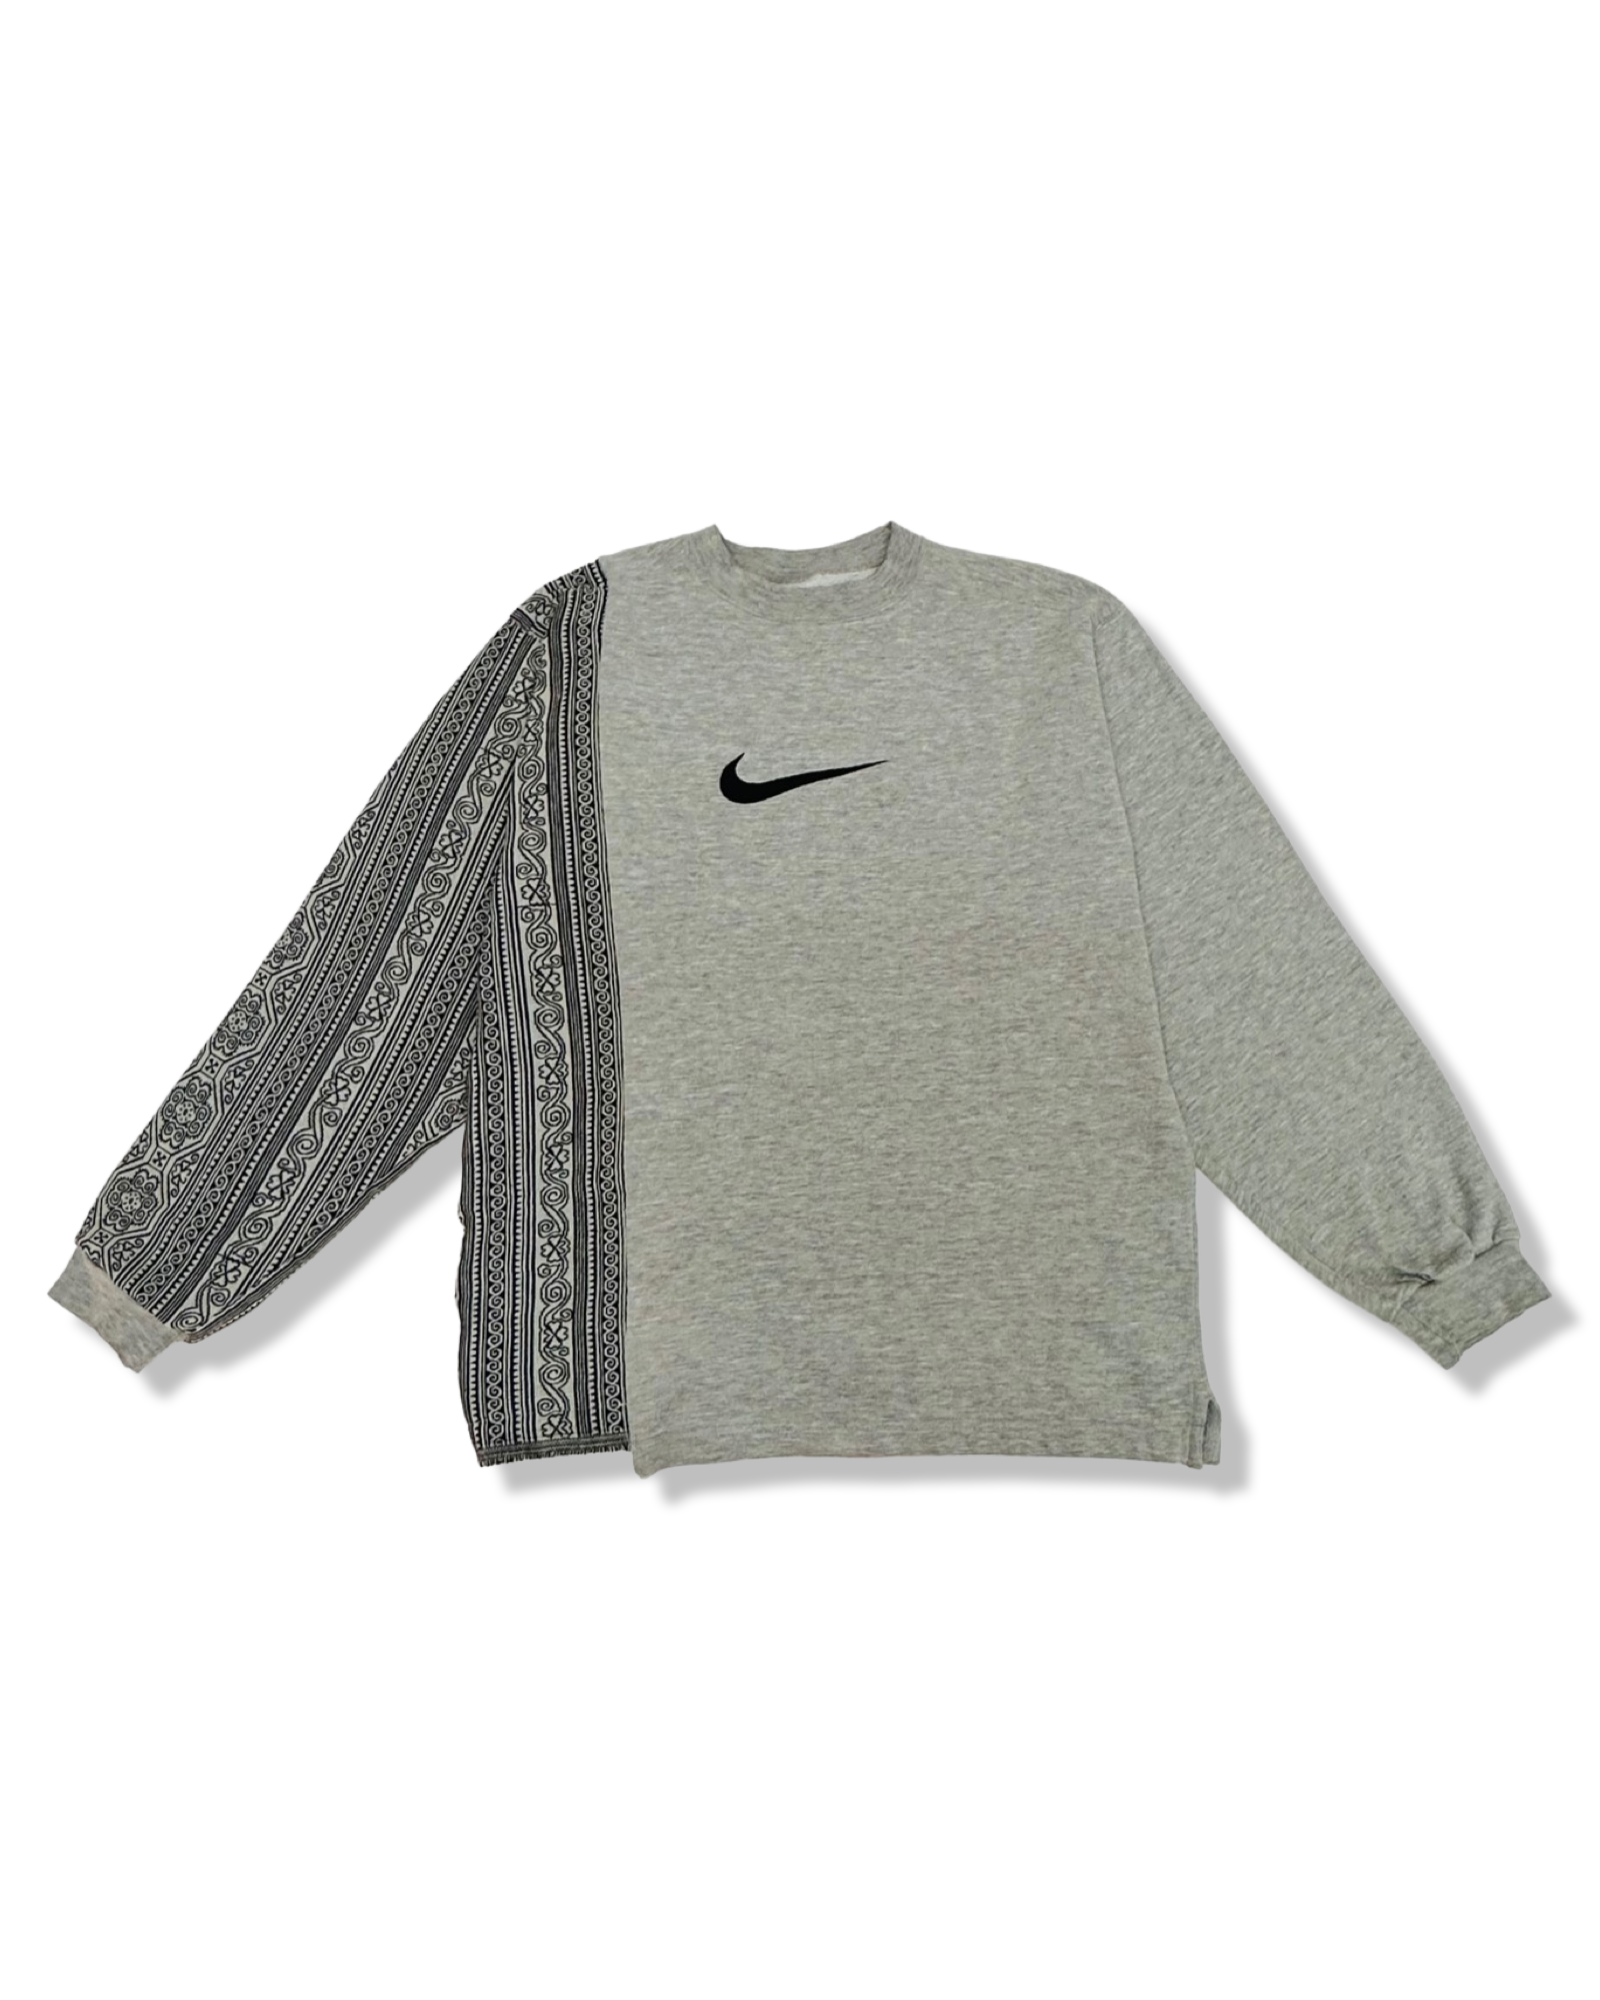 Reworked Nike Sweater